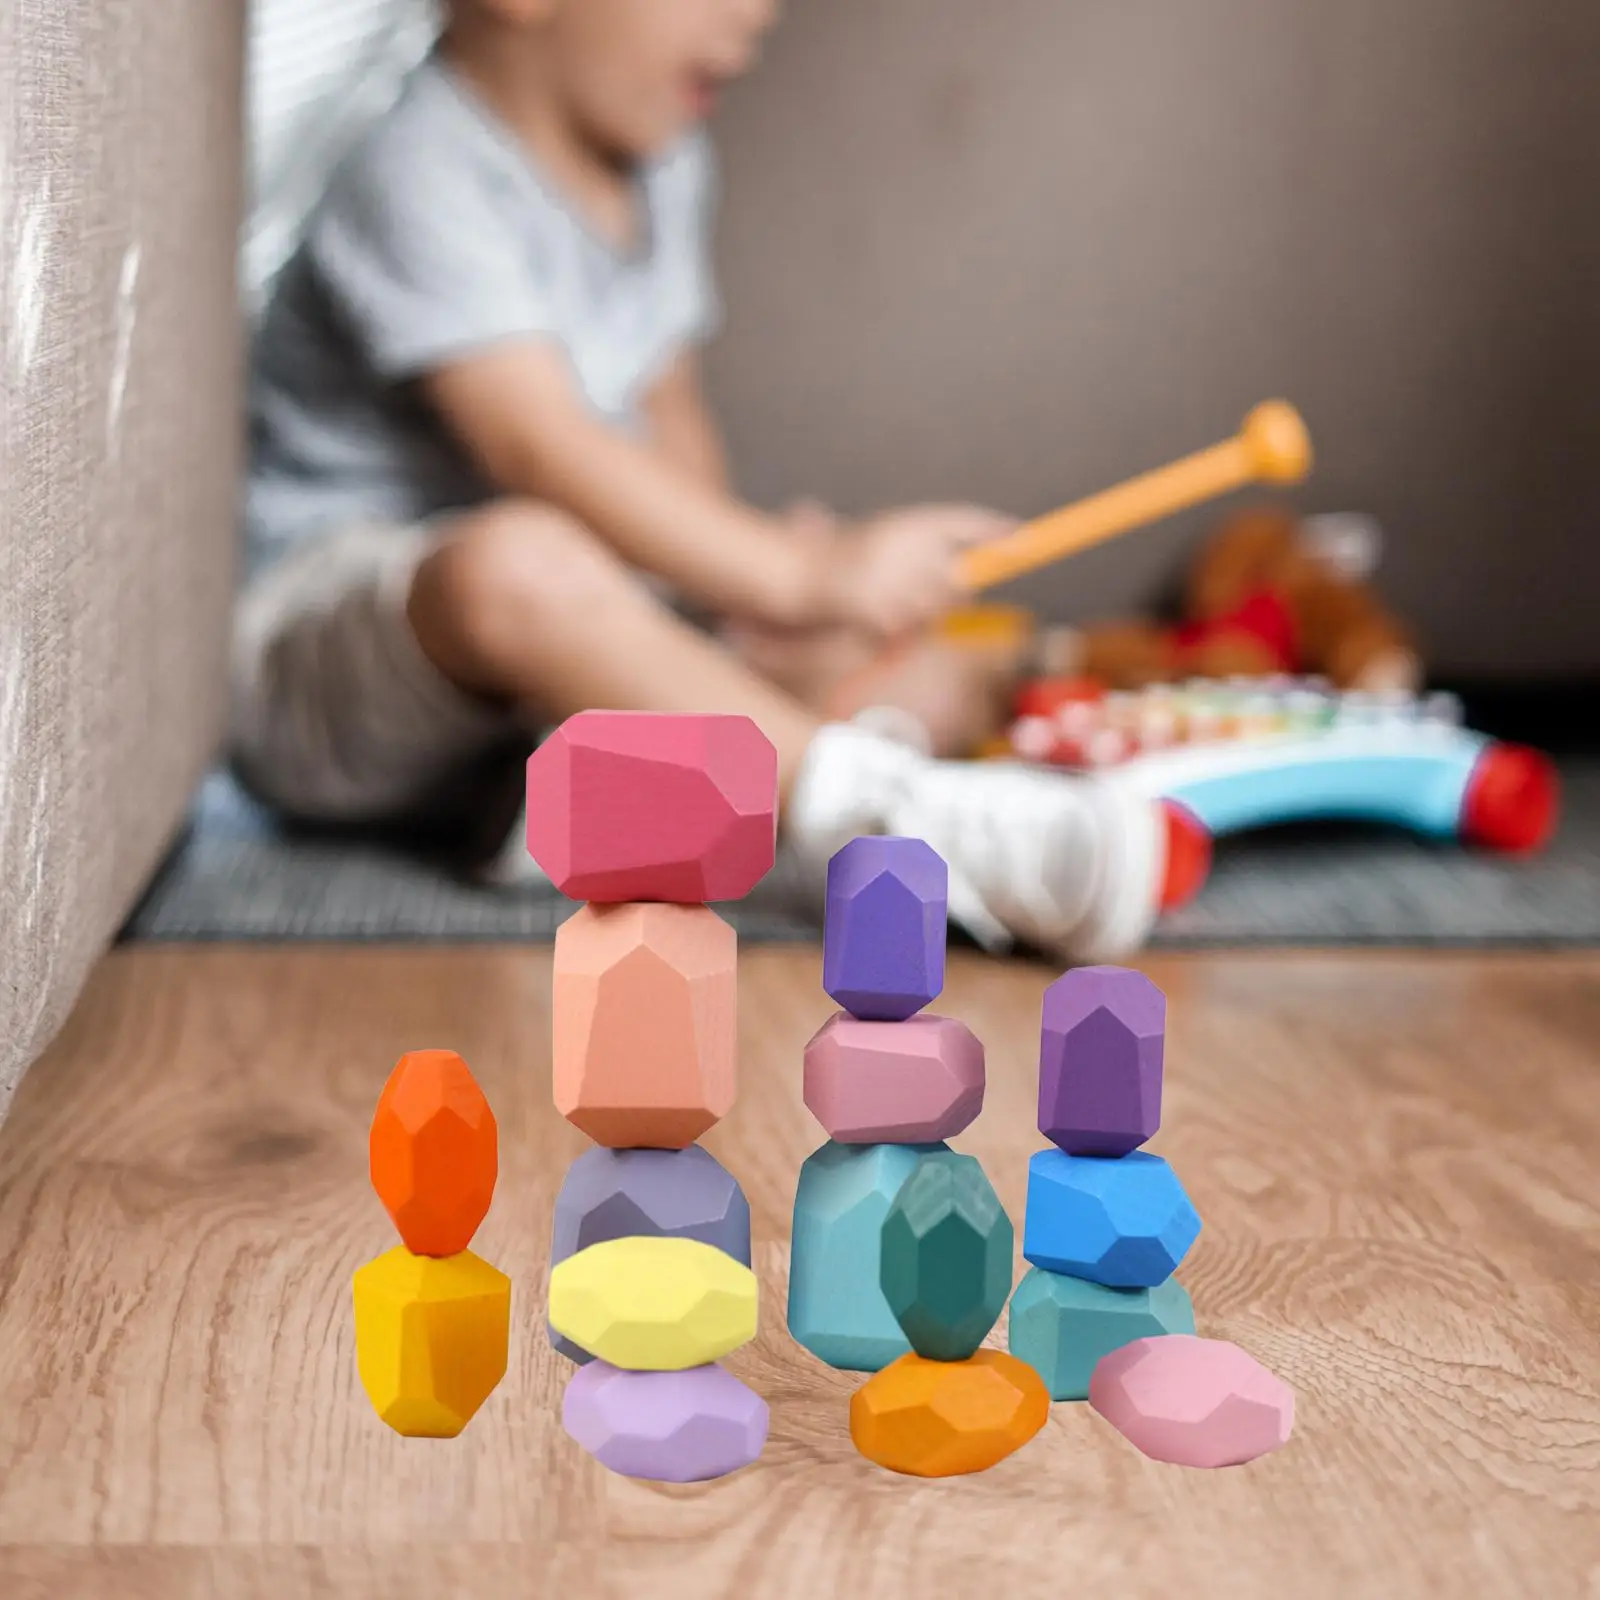 Wooden Sorting Stacking Balancing Stone Montessori Lightweight Artware Building Blocks Stacking Game for Boys Girls 3 Years up